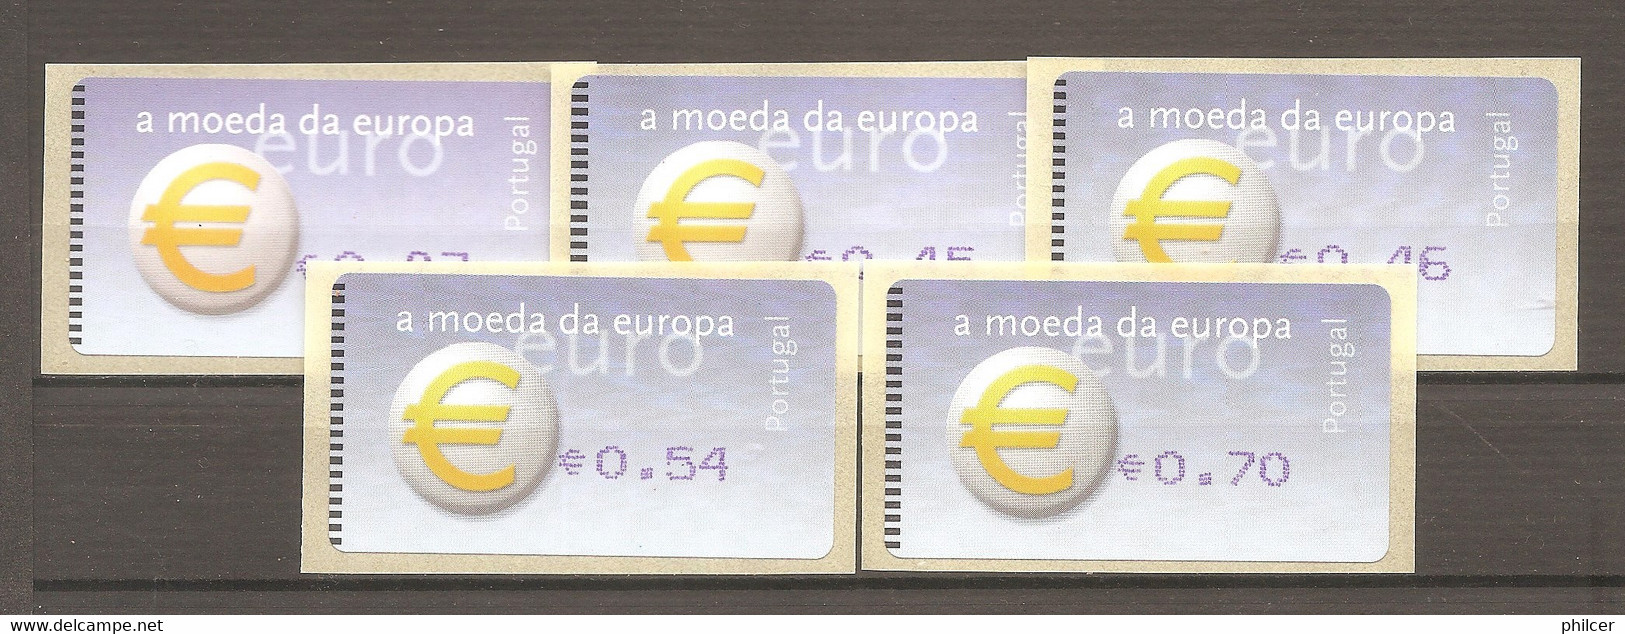 Portugal, 2002, # 23 - Franking Machines (EMA)